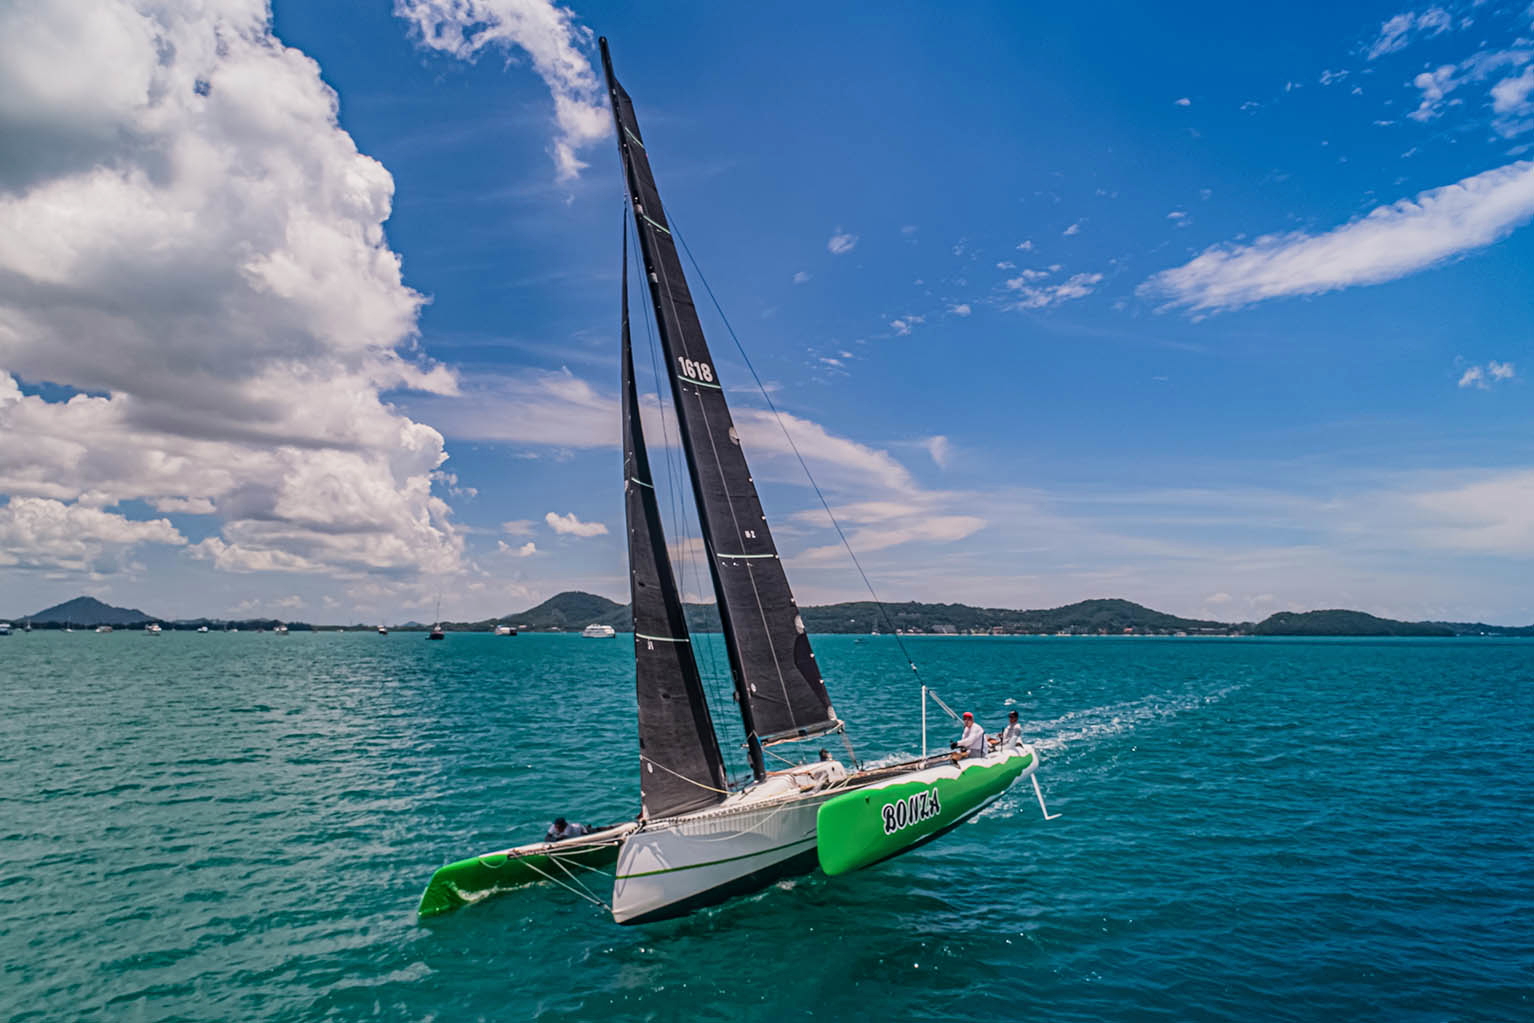 Bonza at Phuket Raceweek 2021. Click to enlarge.